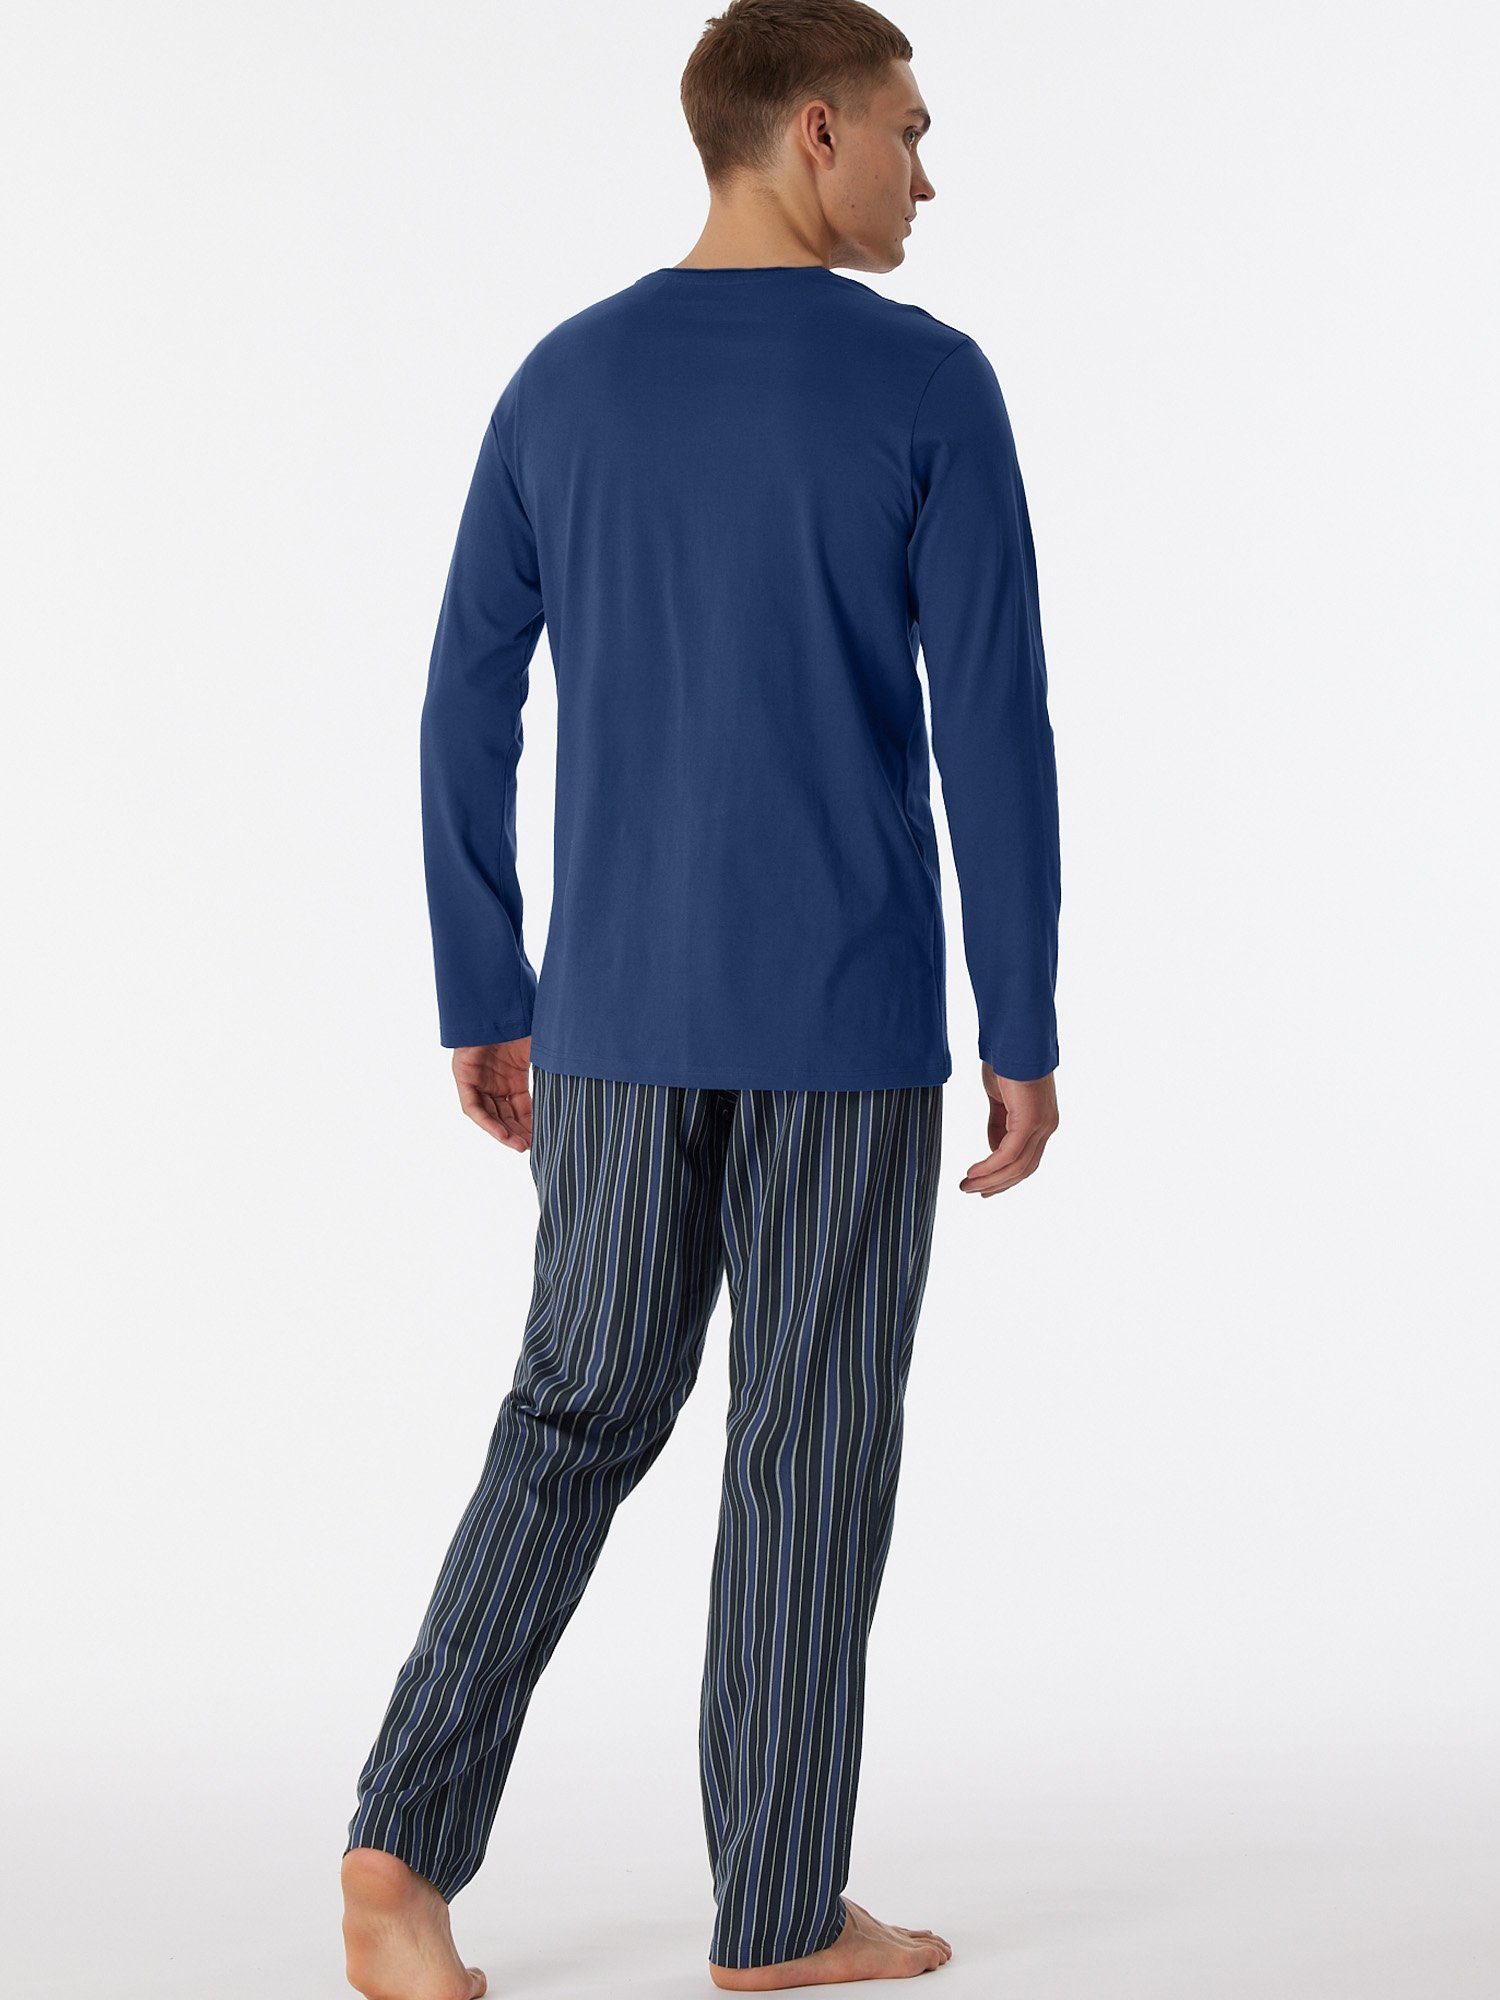 Schiesser Pyjama Selected schlafanzug pyjama navy Premium schlafmode